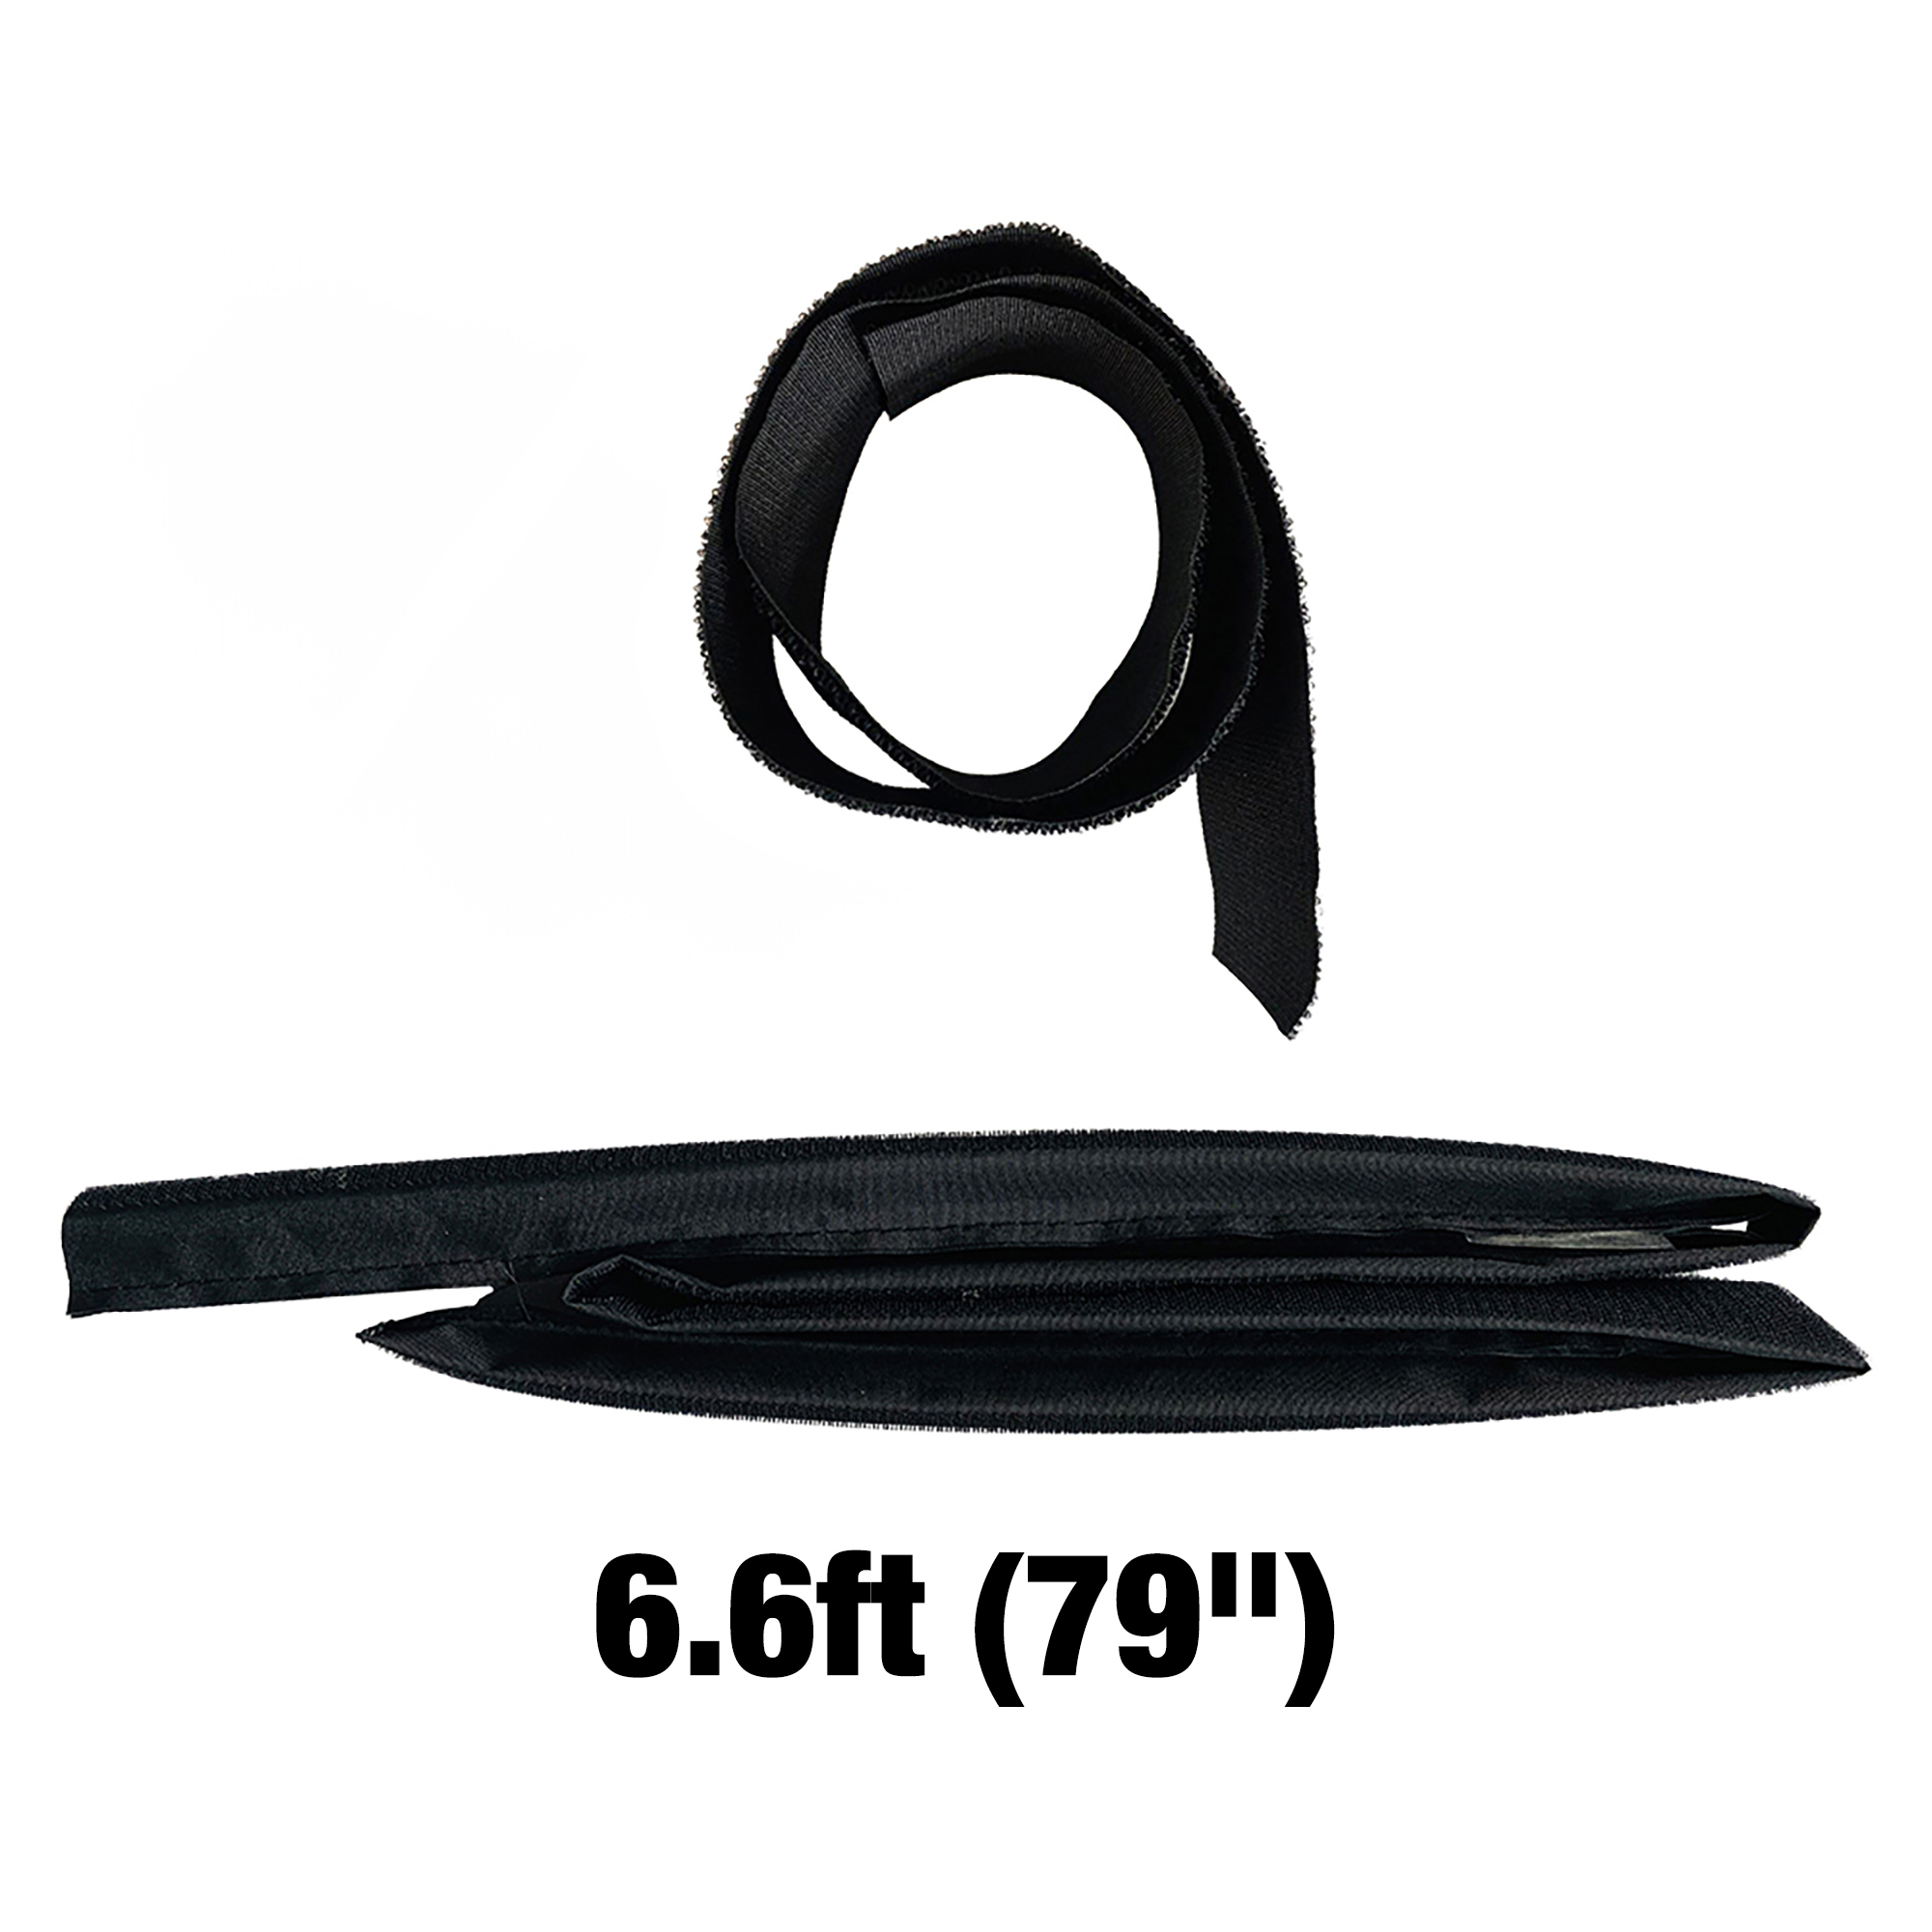 For T1 - Velcro Strip, 6.6ft (79in), 1 Strip